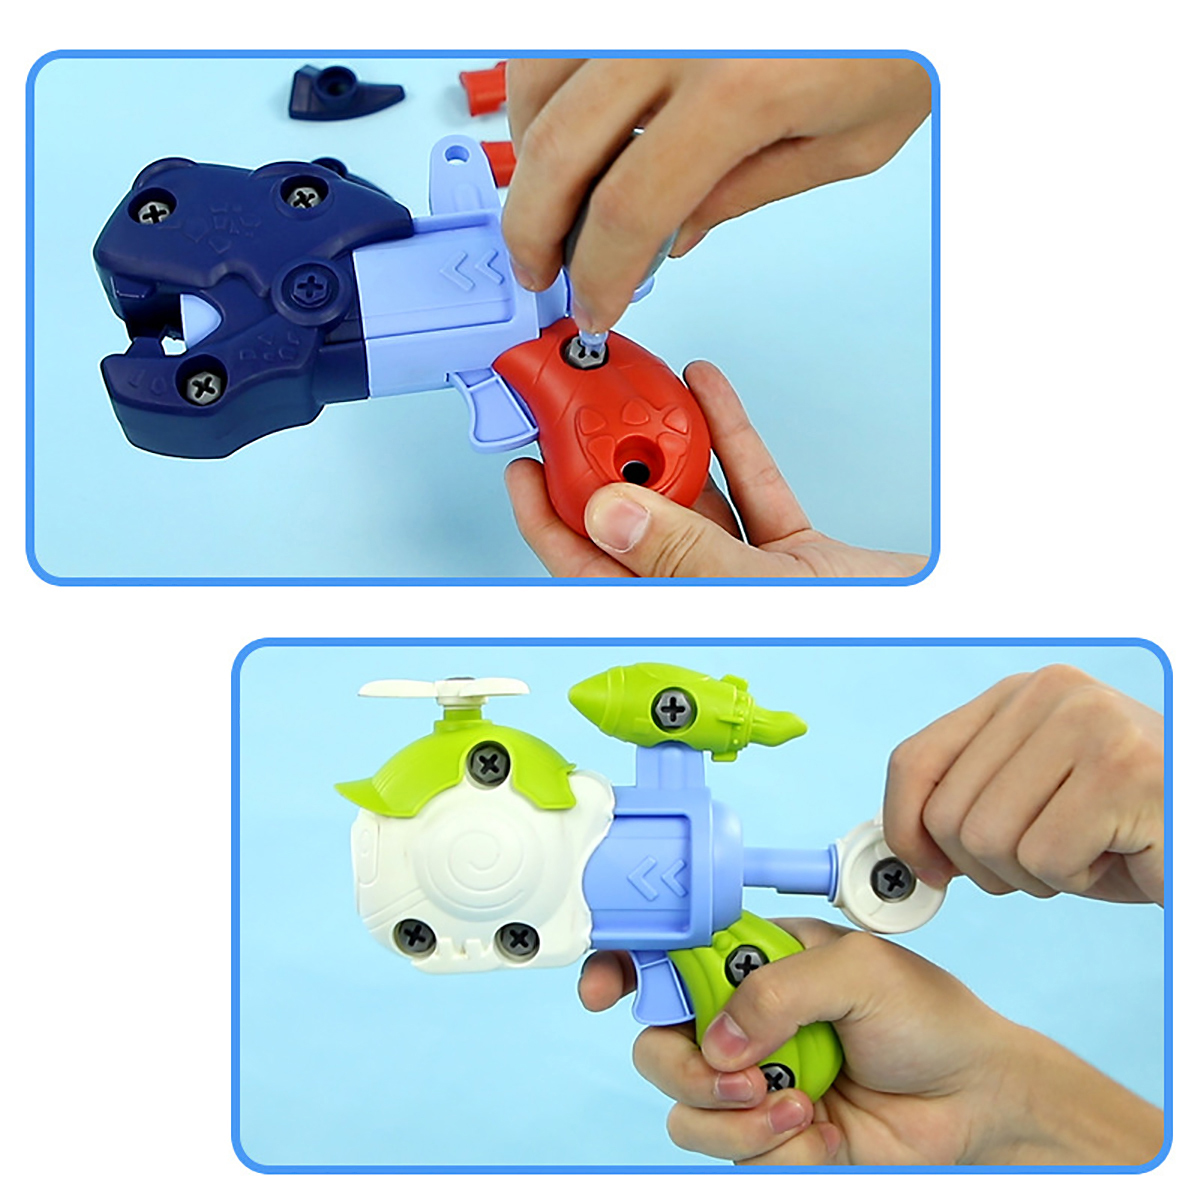 DIY-Disassembly-DinosaurAirplane-Guns-Play-Set-Model-Blocks-Assemble-Educational-Toy-for-Kids-Gift-1829732-9